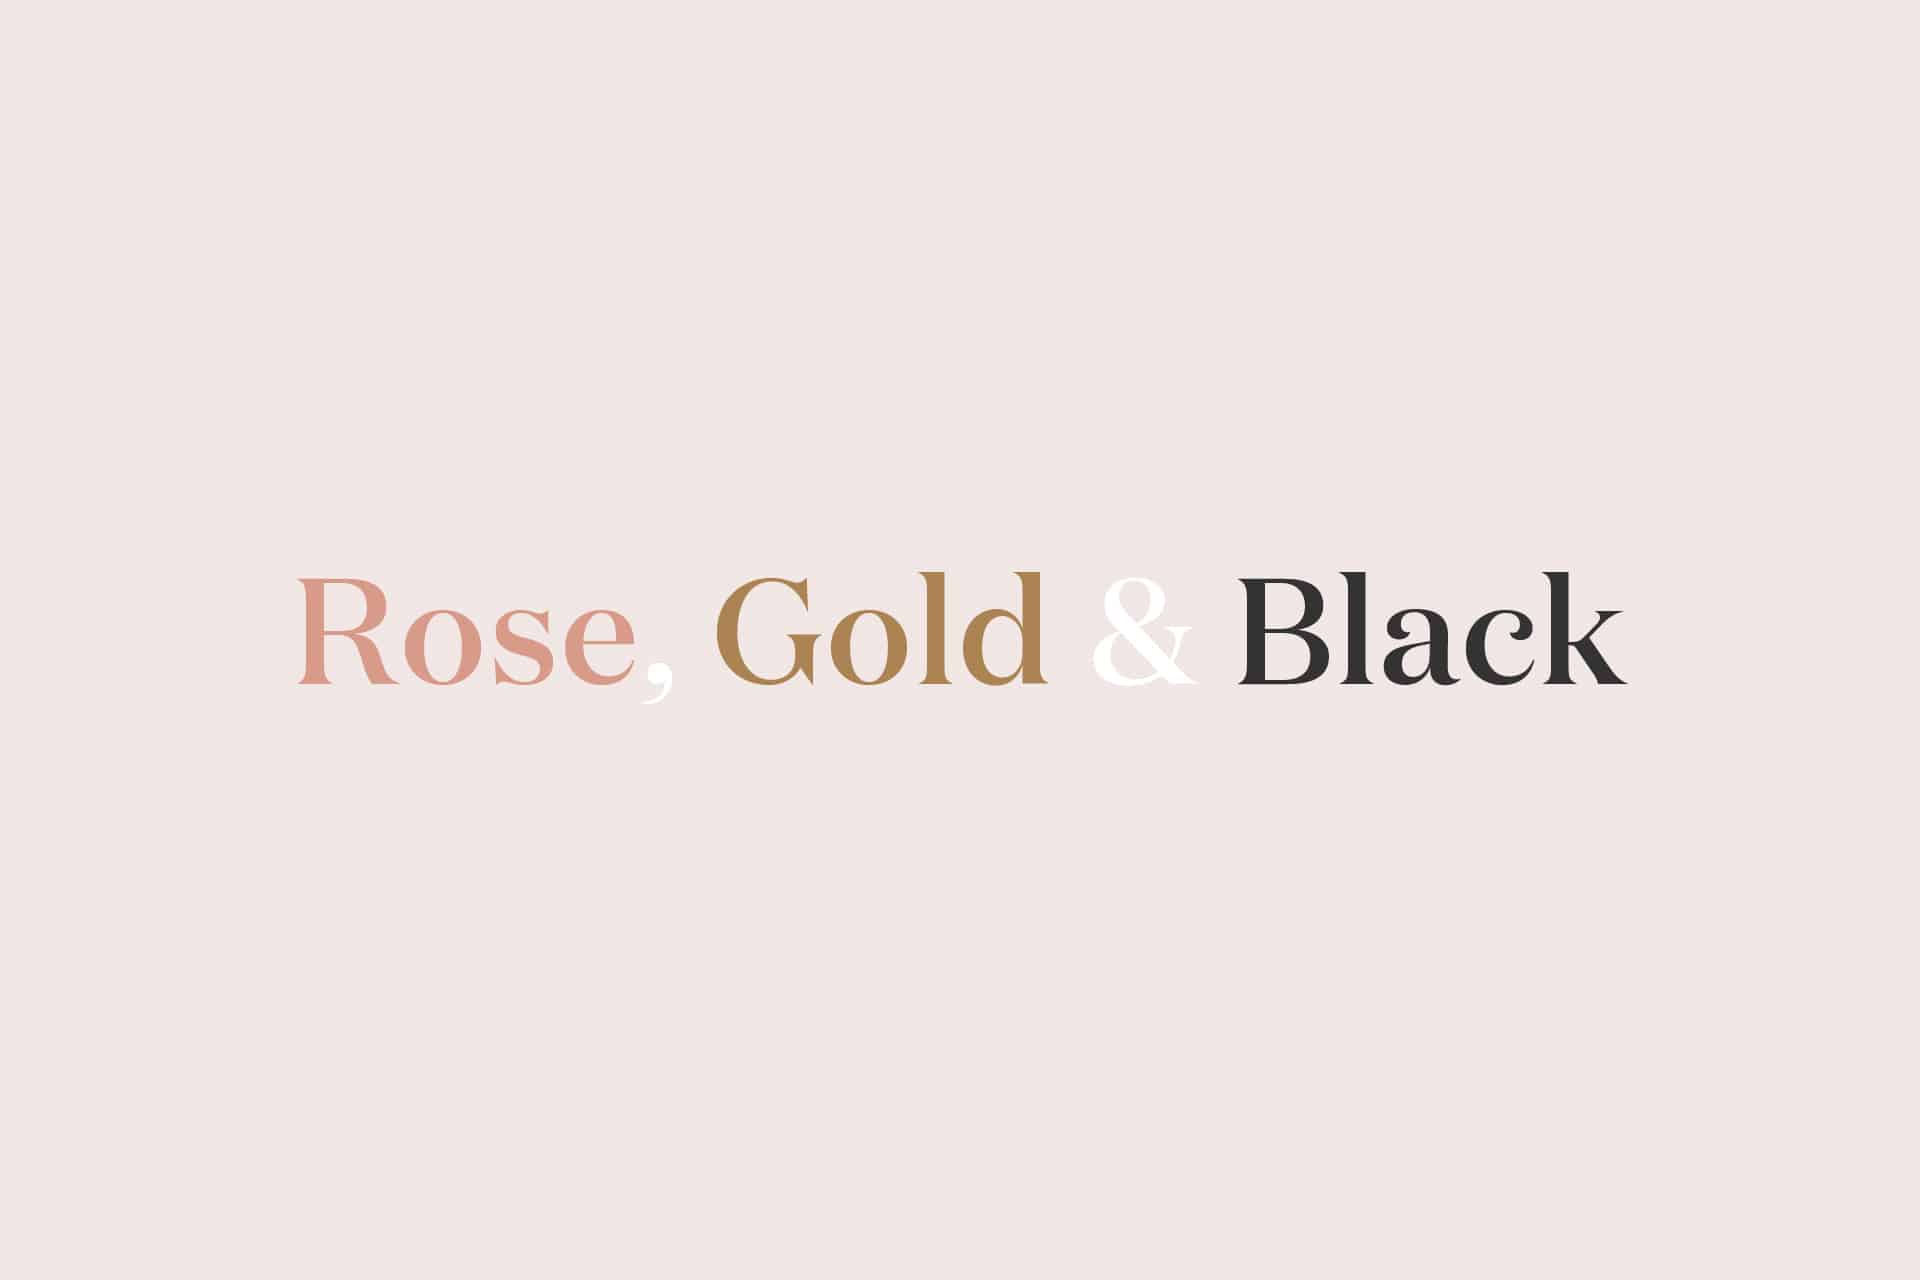 Rose Gold and Black Logo - Rose, Gold & Black — Fabrizio Morra